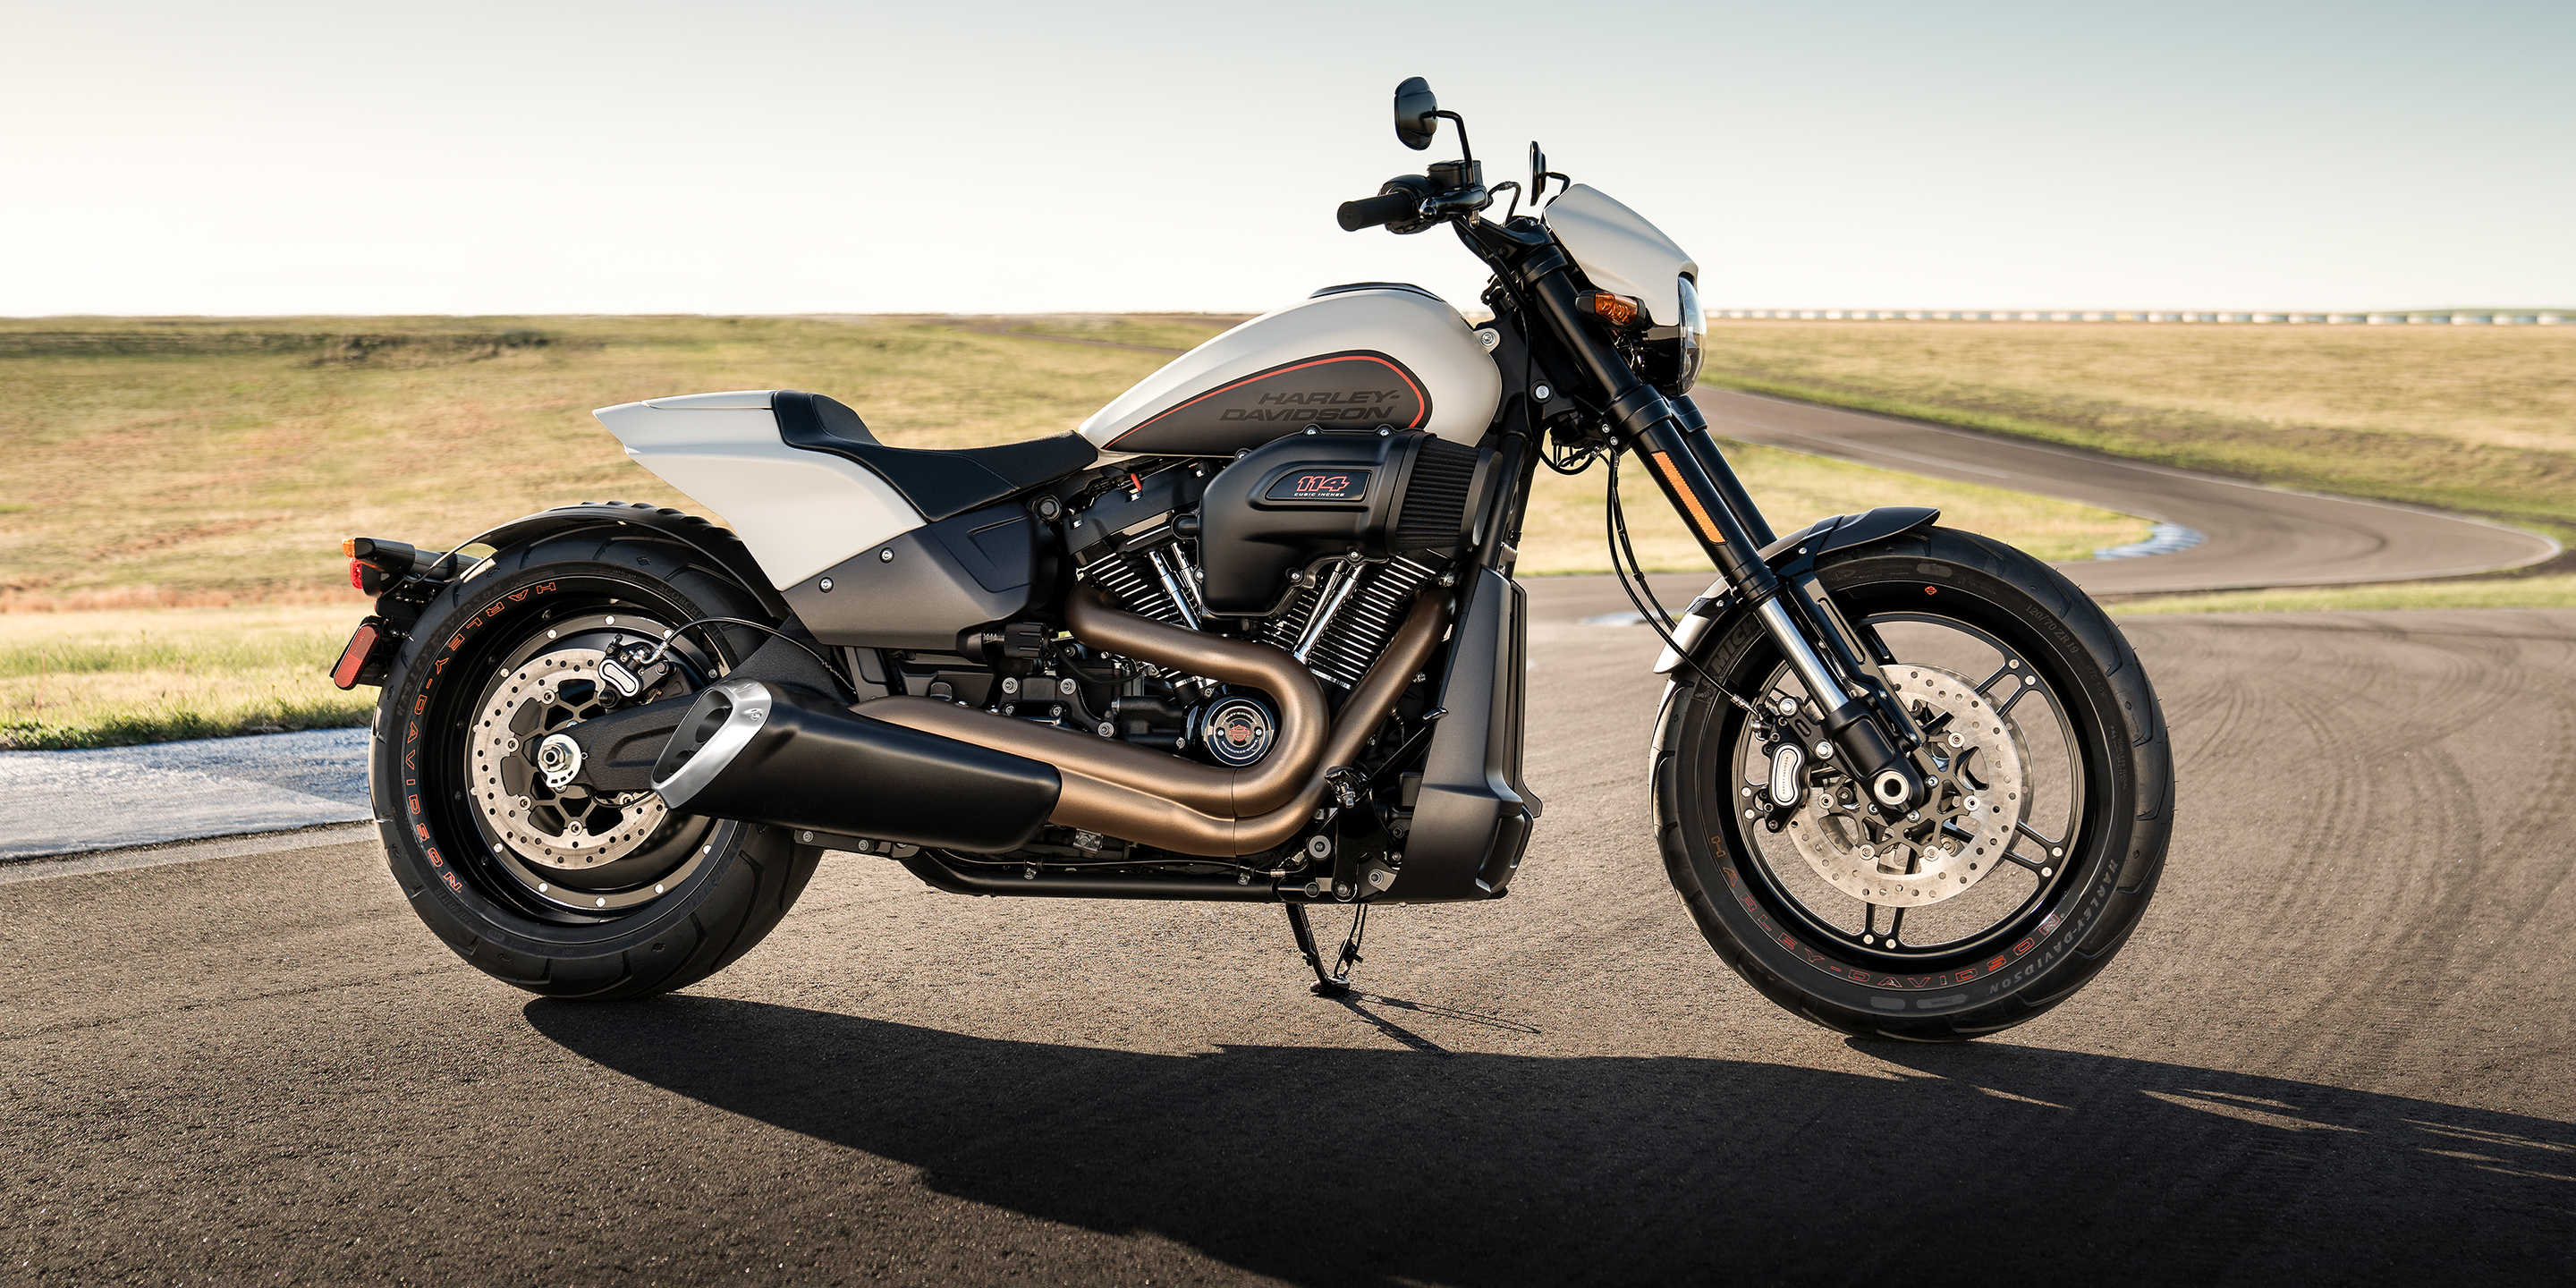  Modello  FXDR 2019  Harley  Davidson  Italia